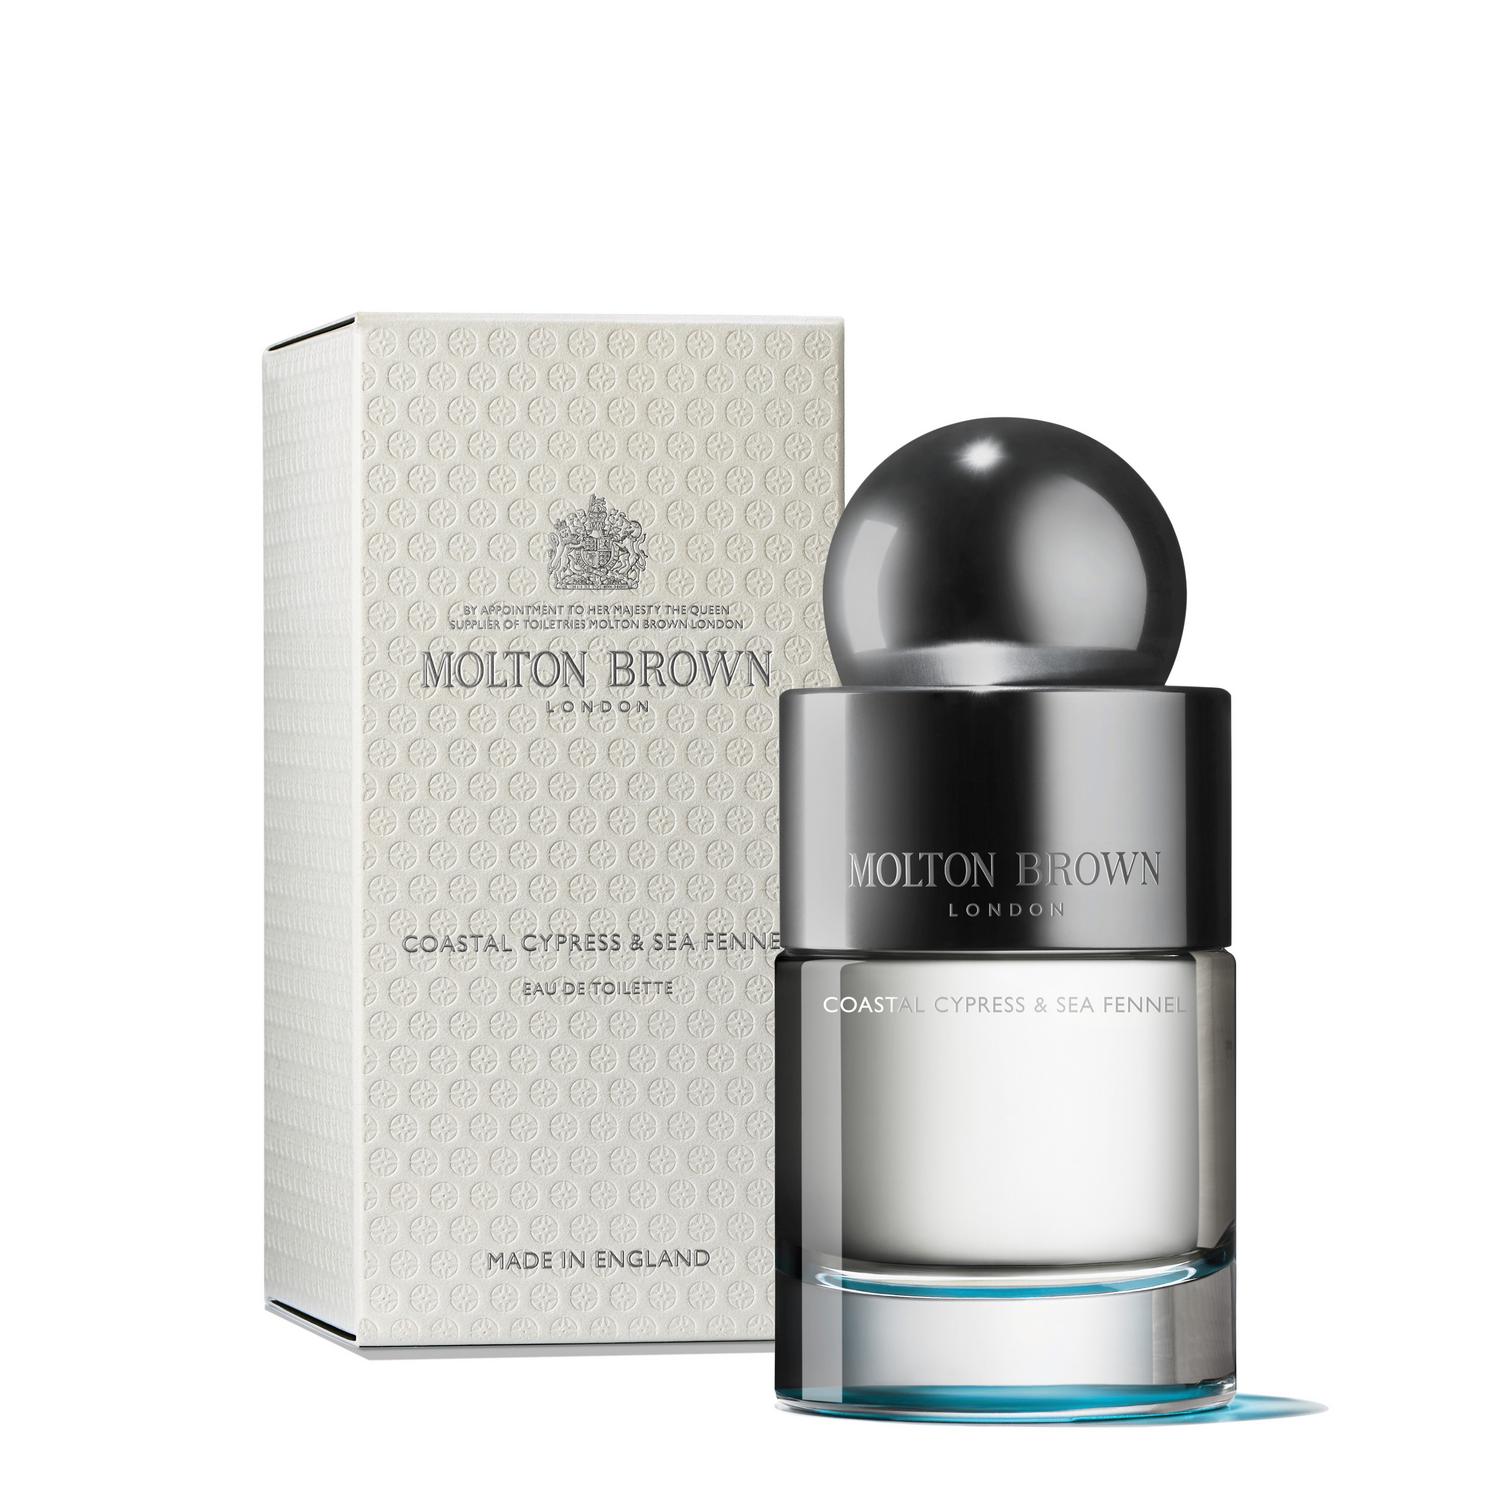 Molton Brown Coastal Cypress & Sea Fennel Perfume Bottle and Box